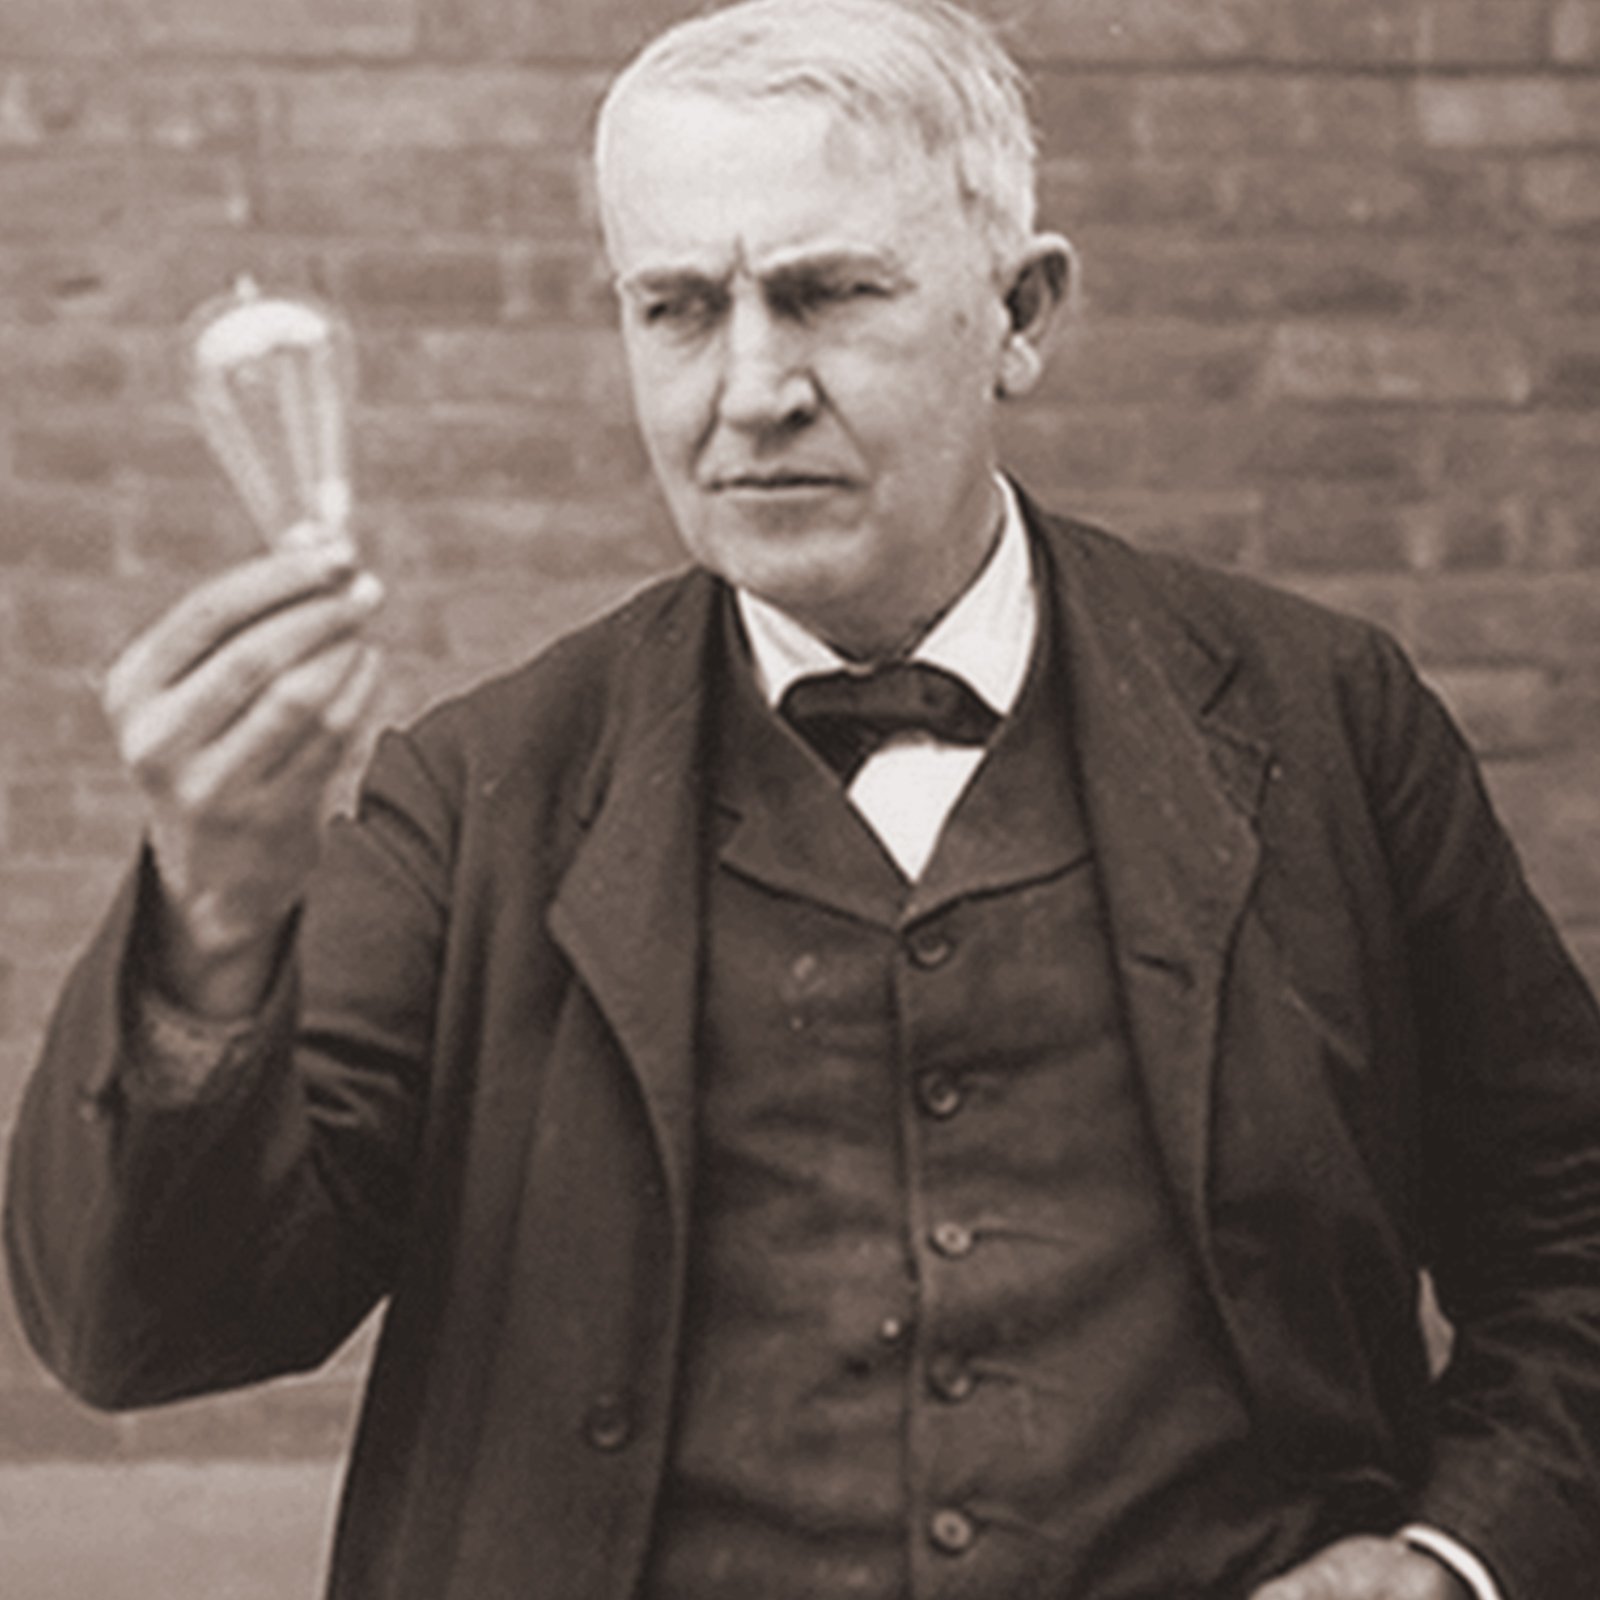 Thomas Alva Edison invented the carbon fibre light bulb